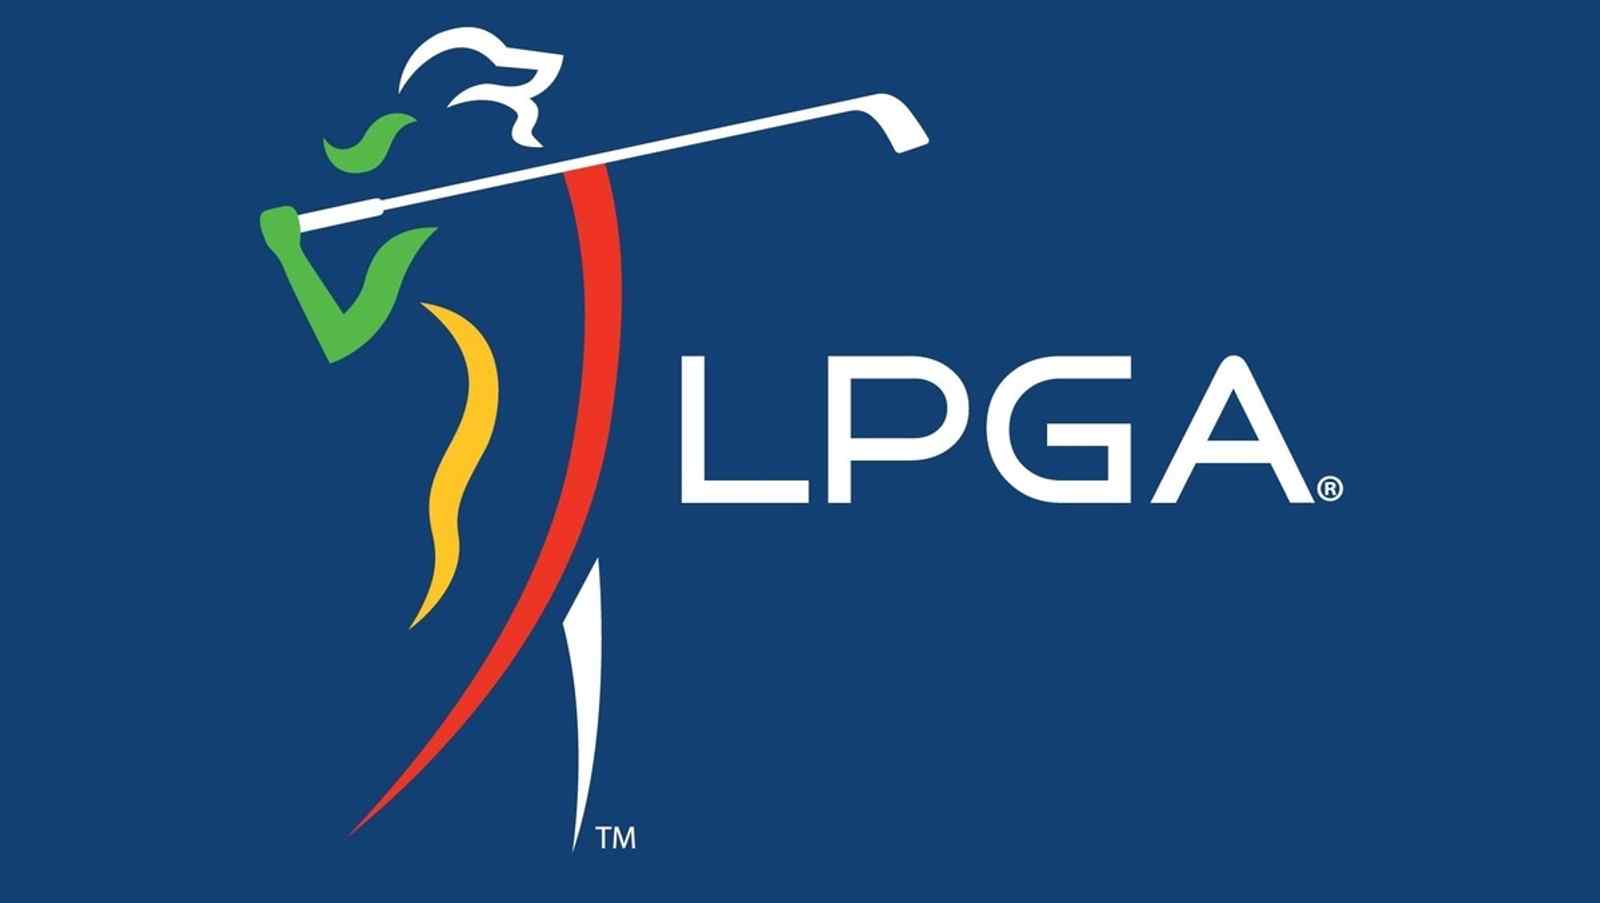 Ascendant National Title to co-sponsor LPGA event